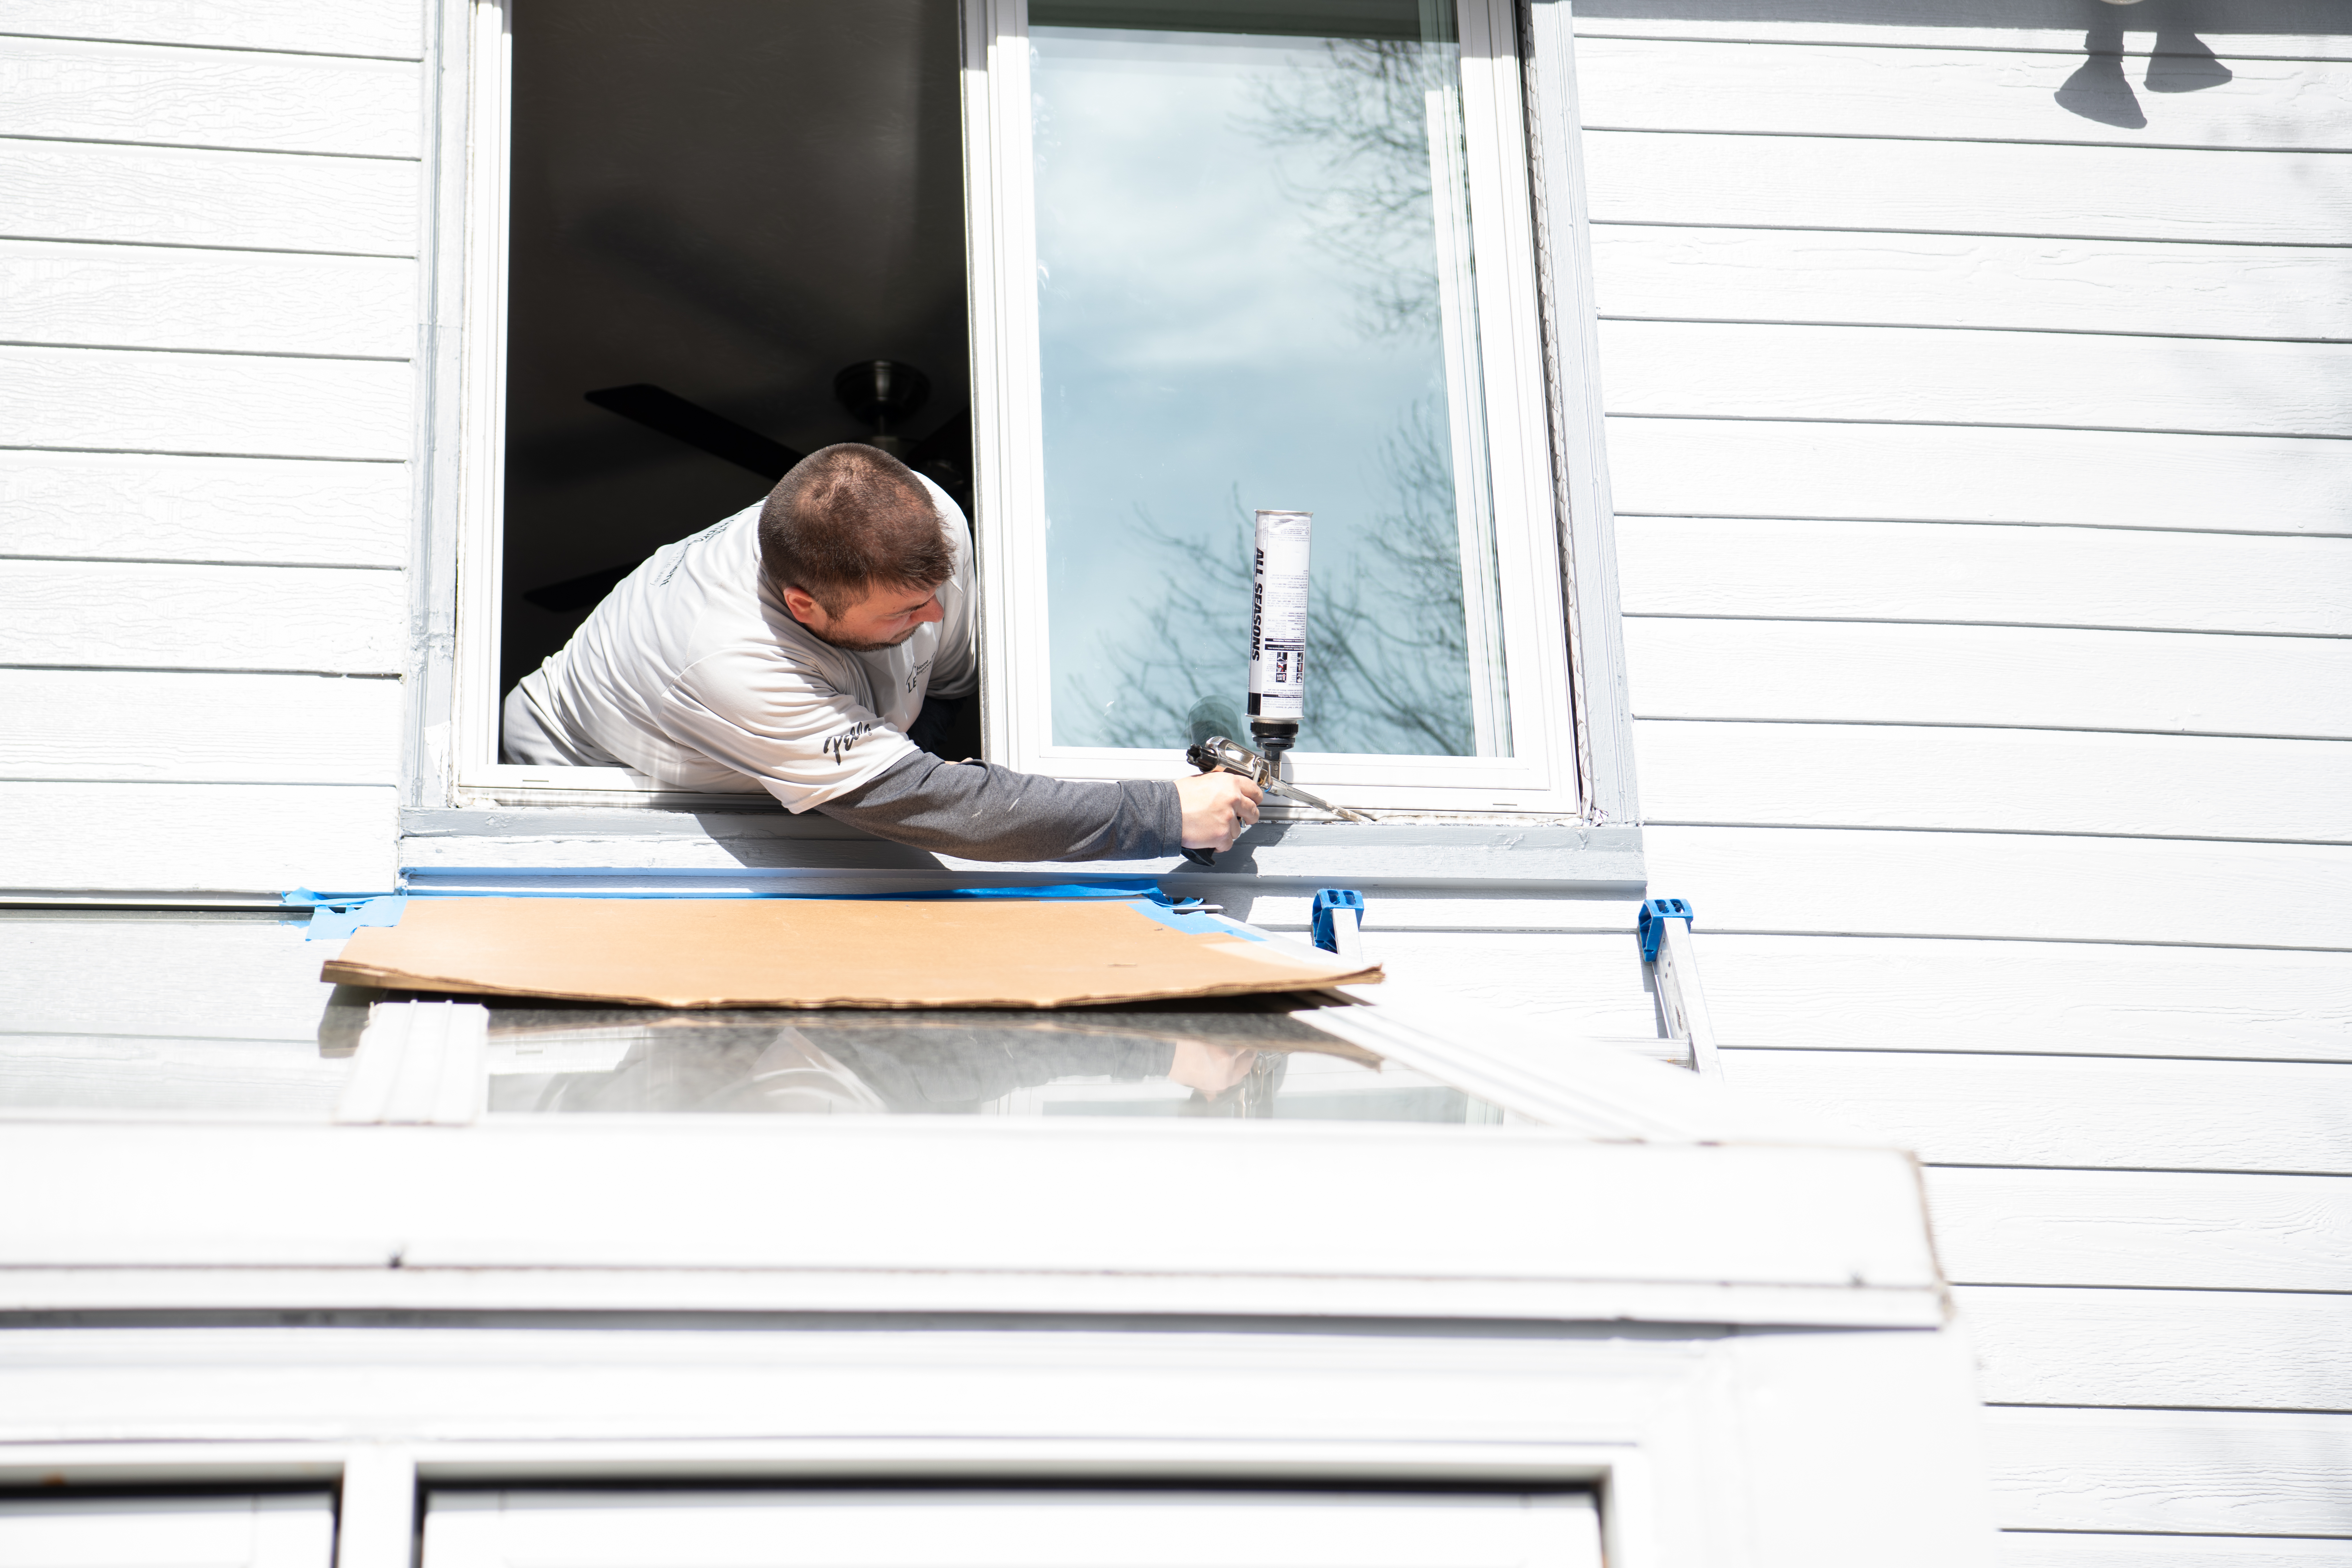 Pella expert installing Impervia sliding window